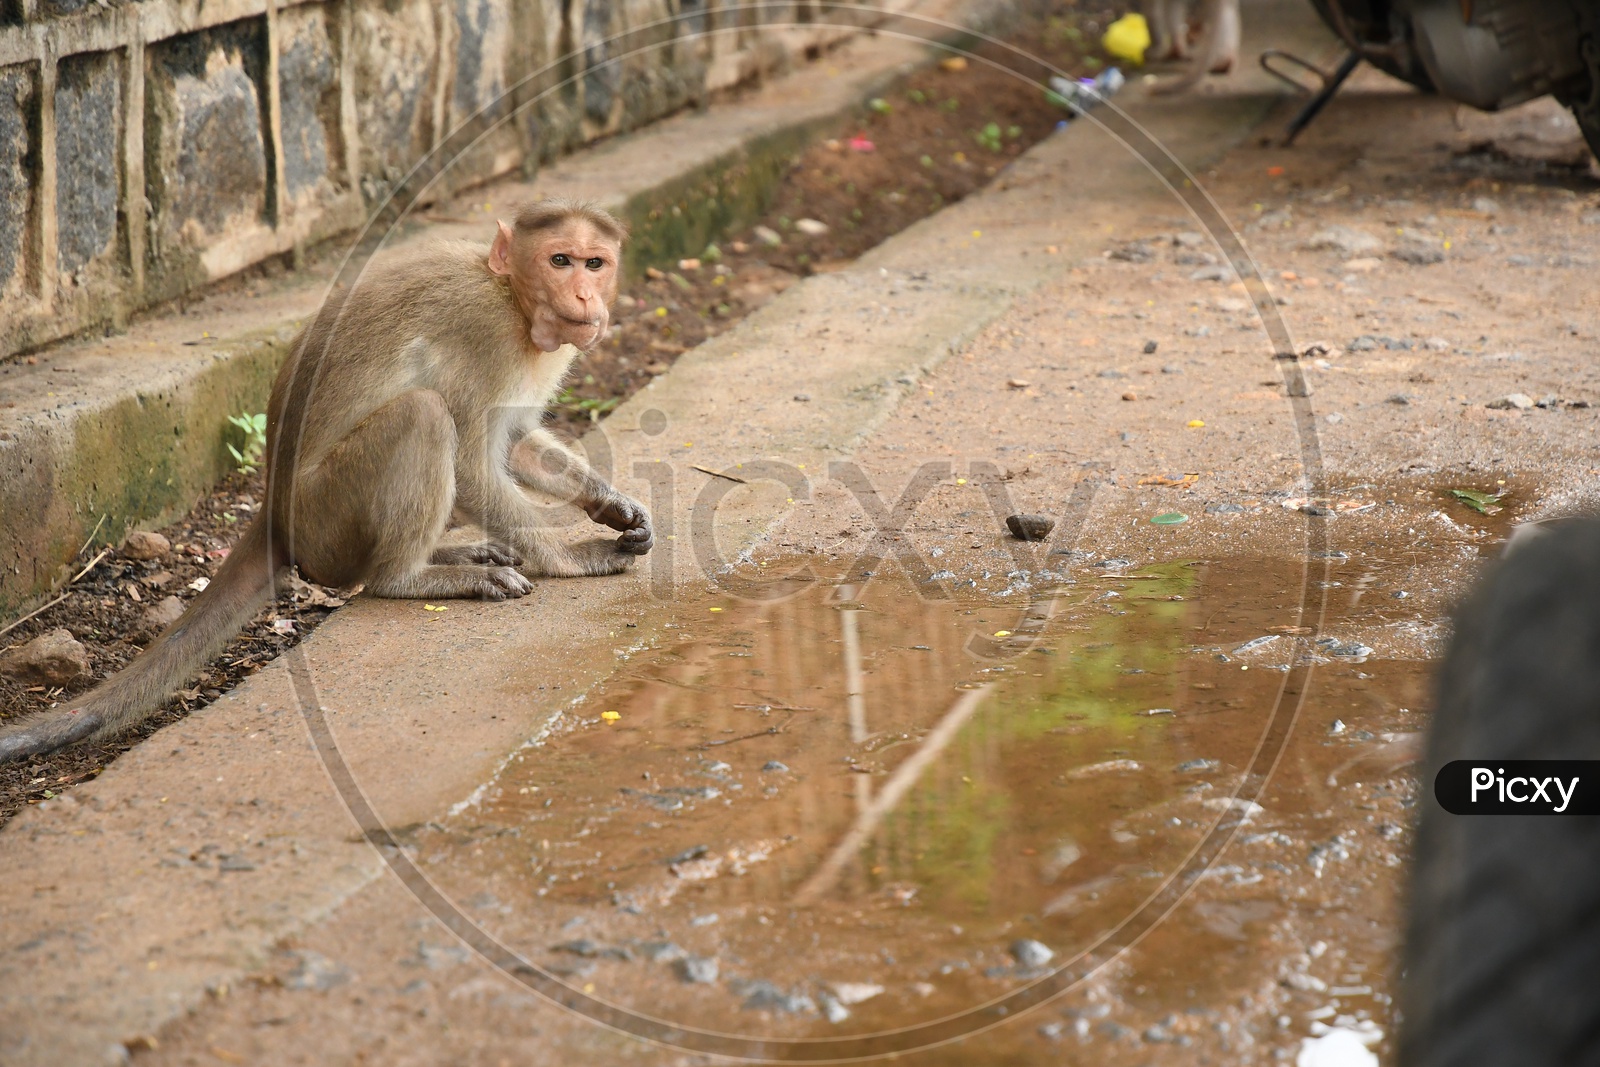 A Monkey along the wet area